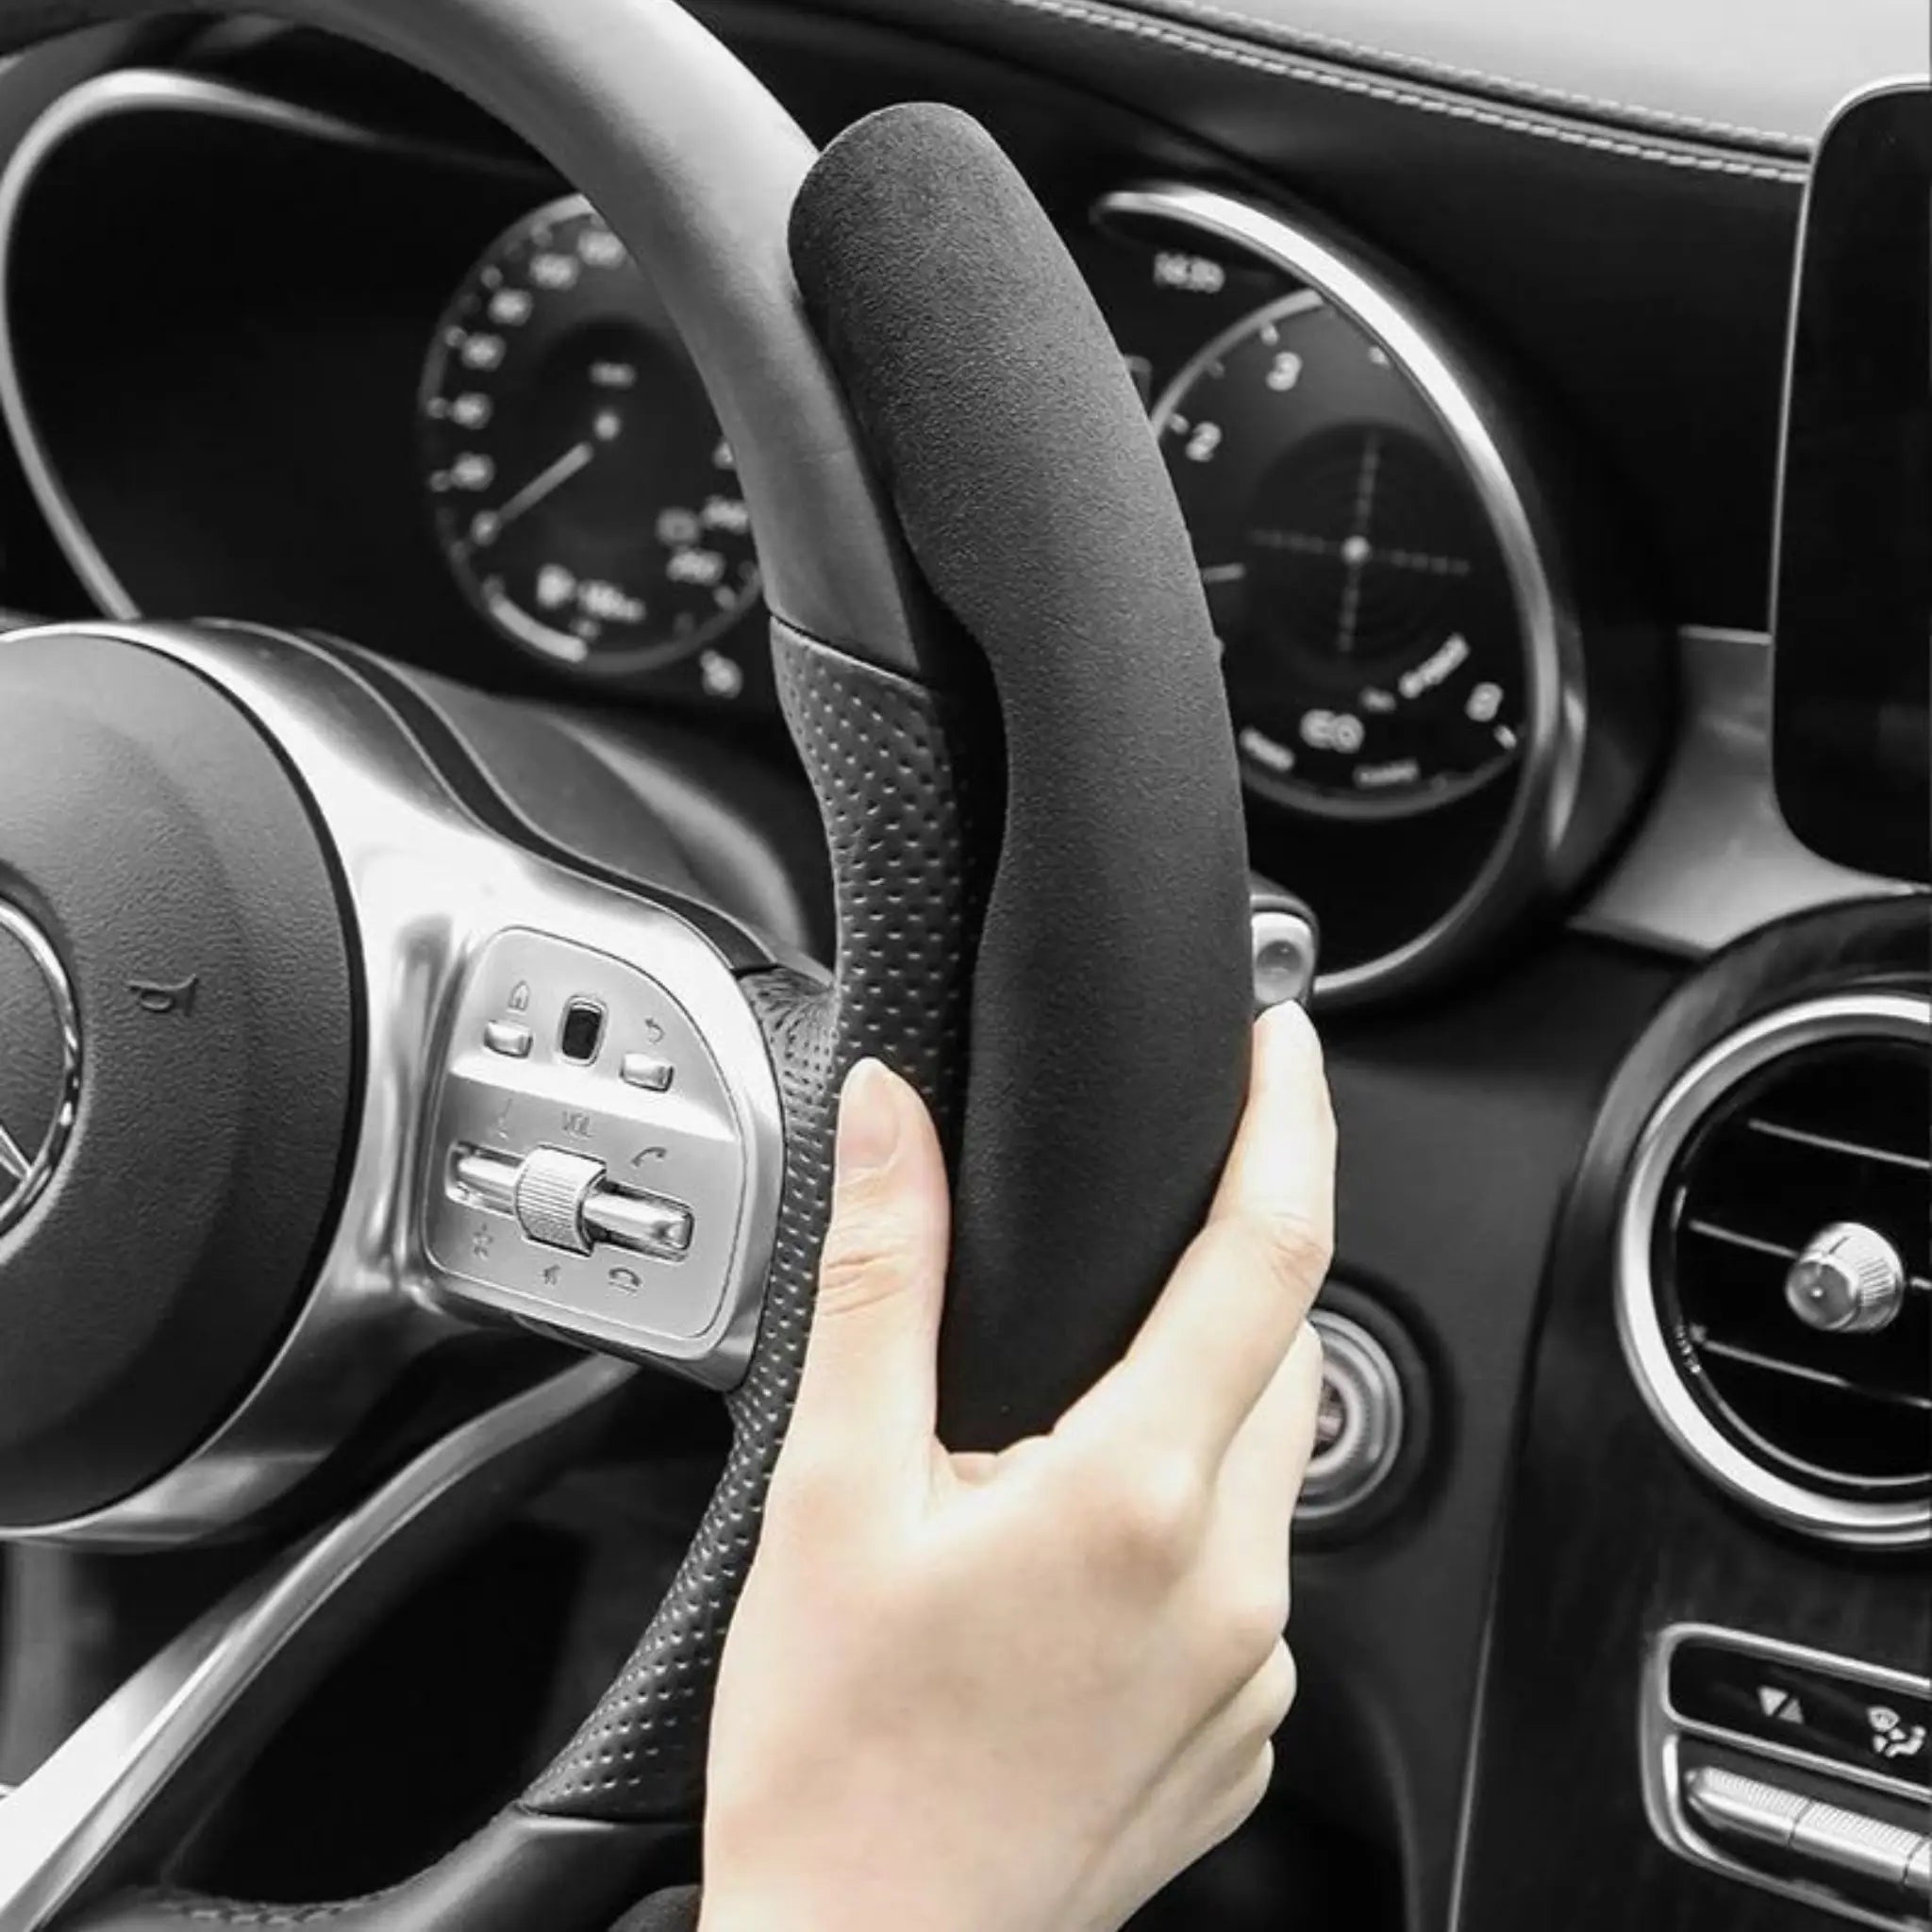 NEW Luxus Suede Minimalist Steering Wheel Covers